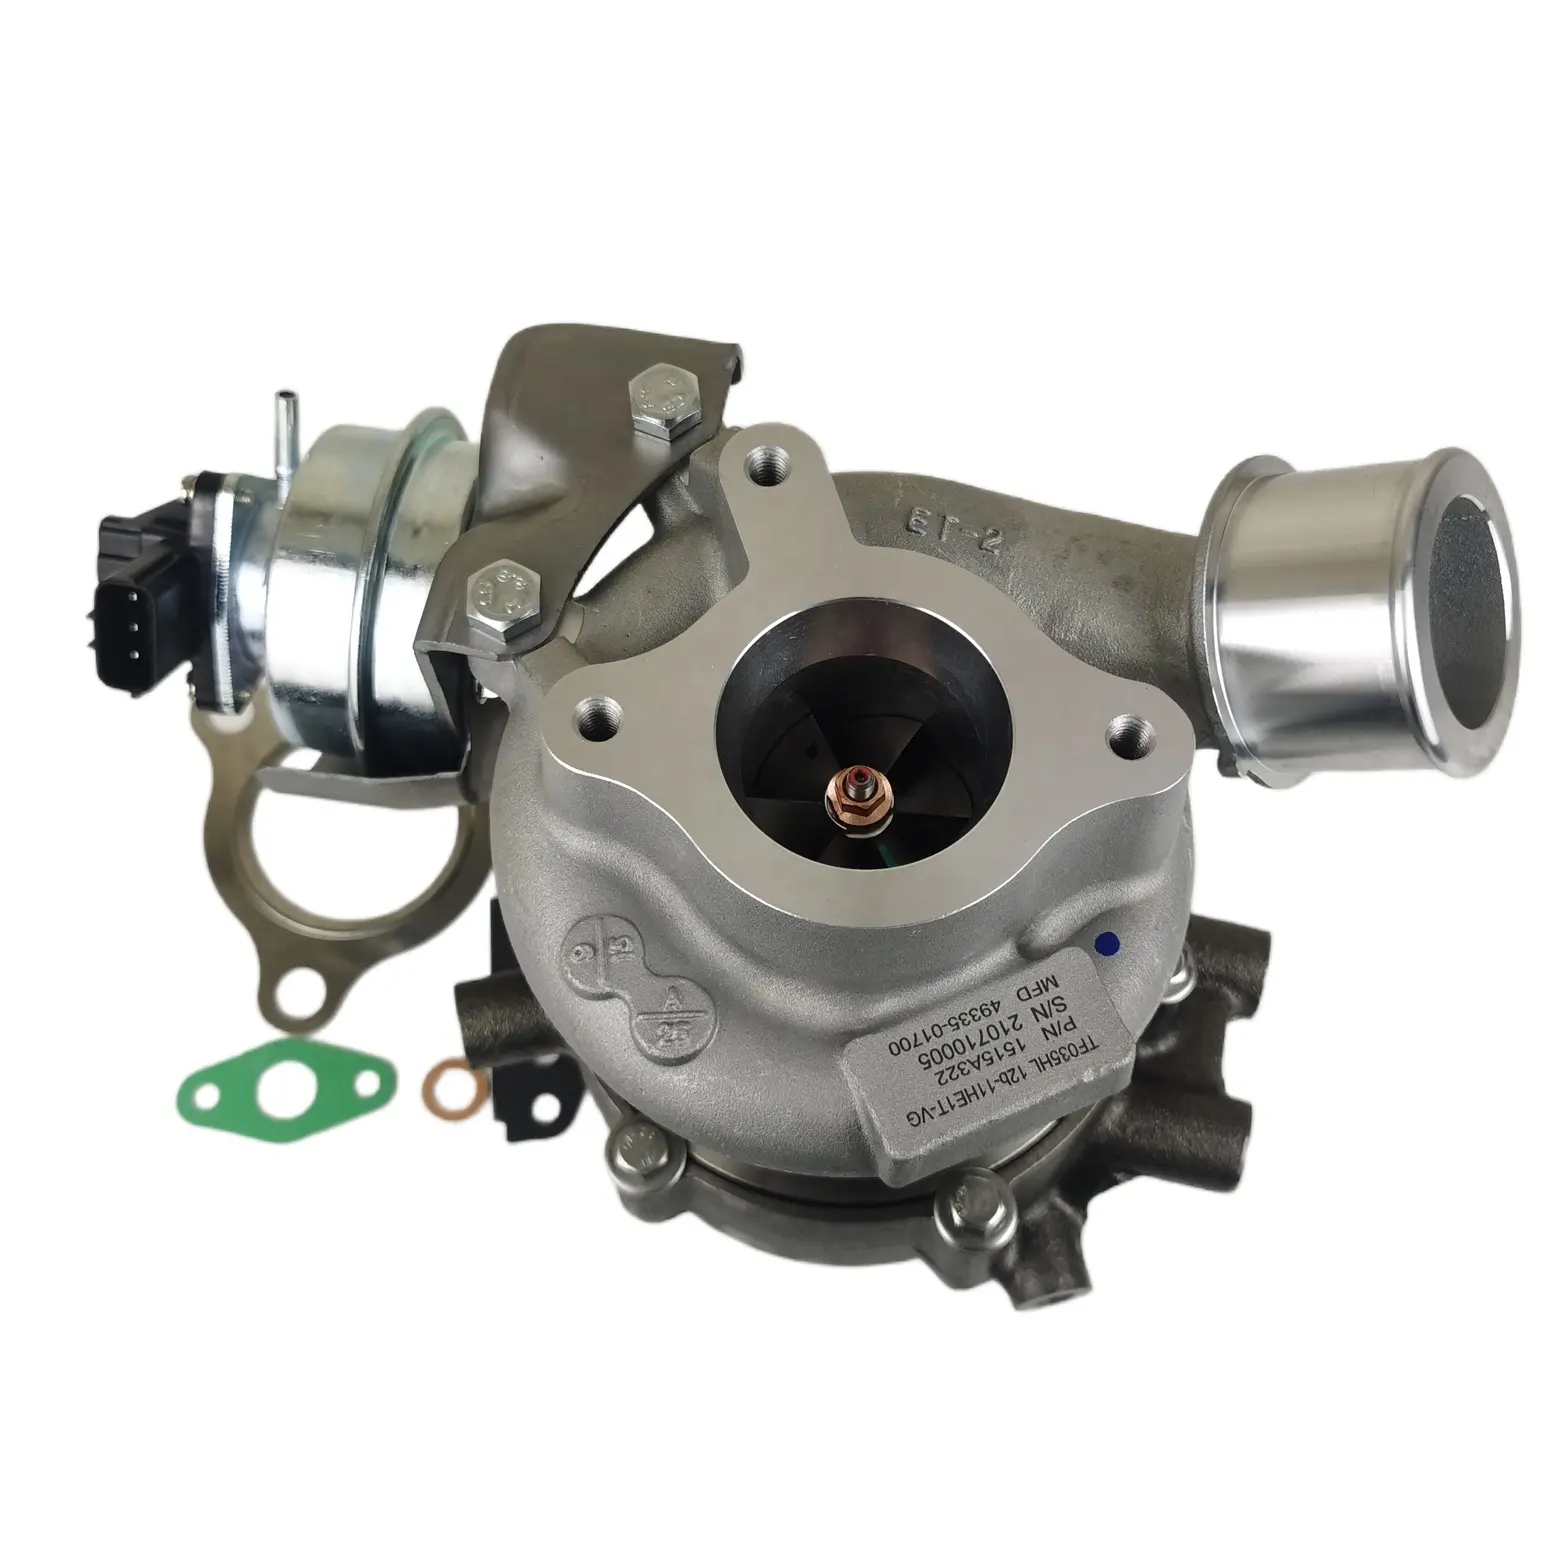 Turbocharger TF035 49335-01700 turbine 1515A322 4933501700 for Mitsubishi L200 Triton 2.5D 4N15